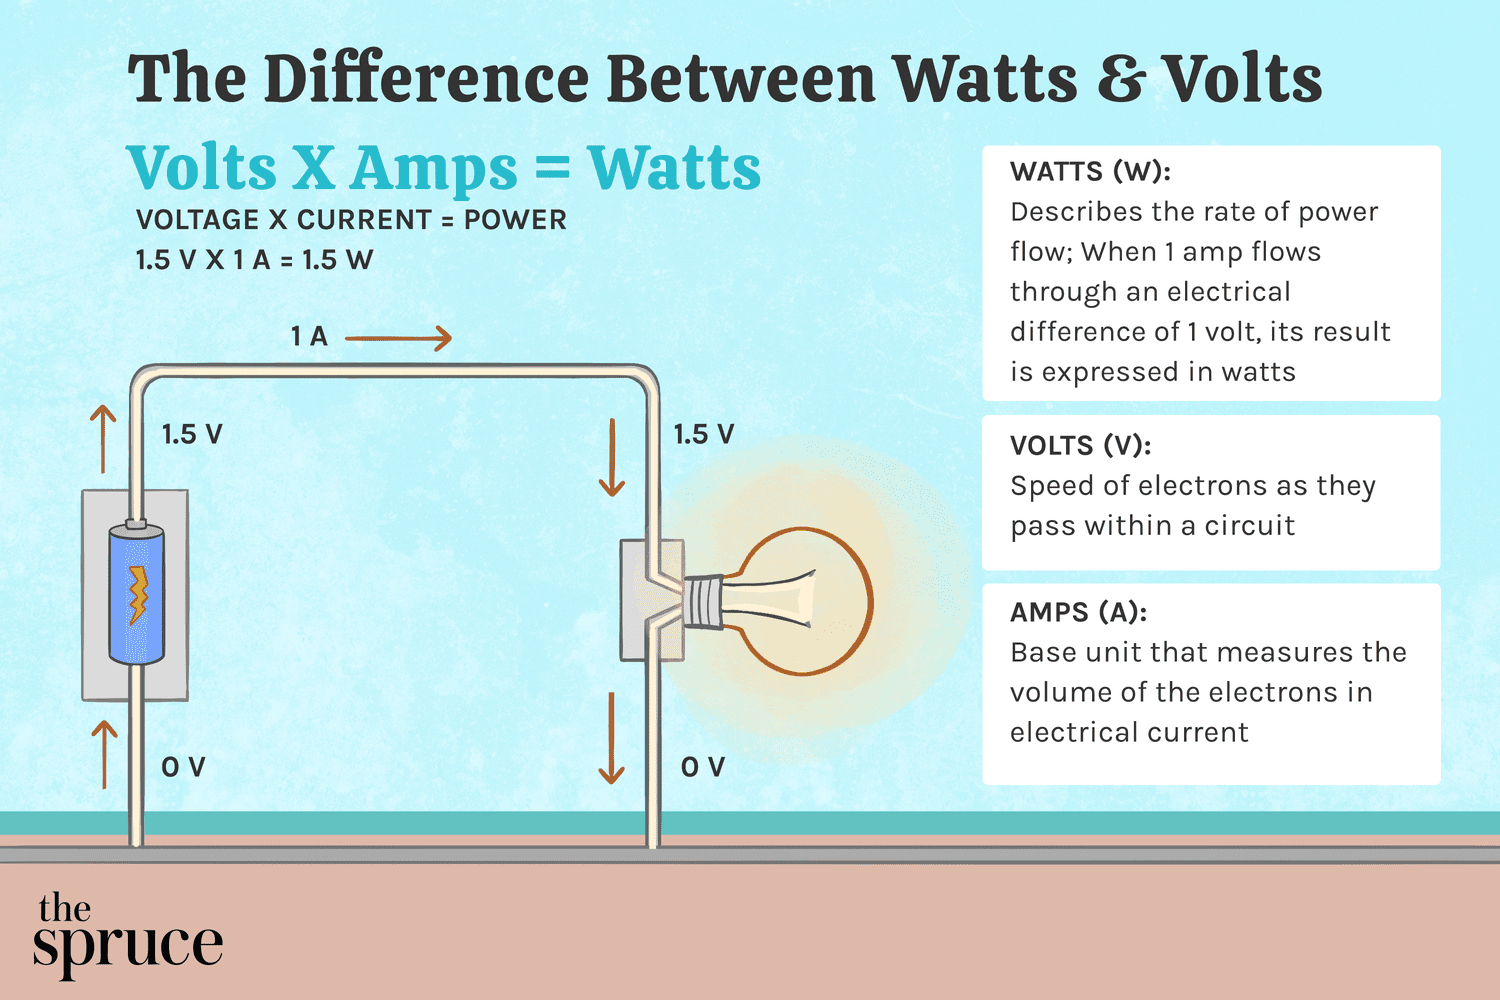 Watts vs. Volts: Entenda a diferença